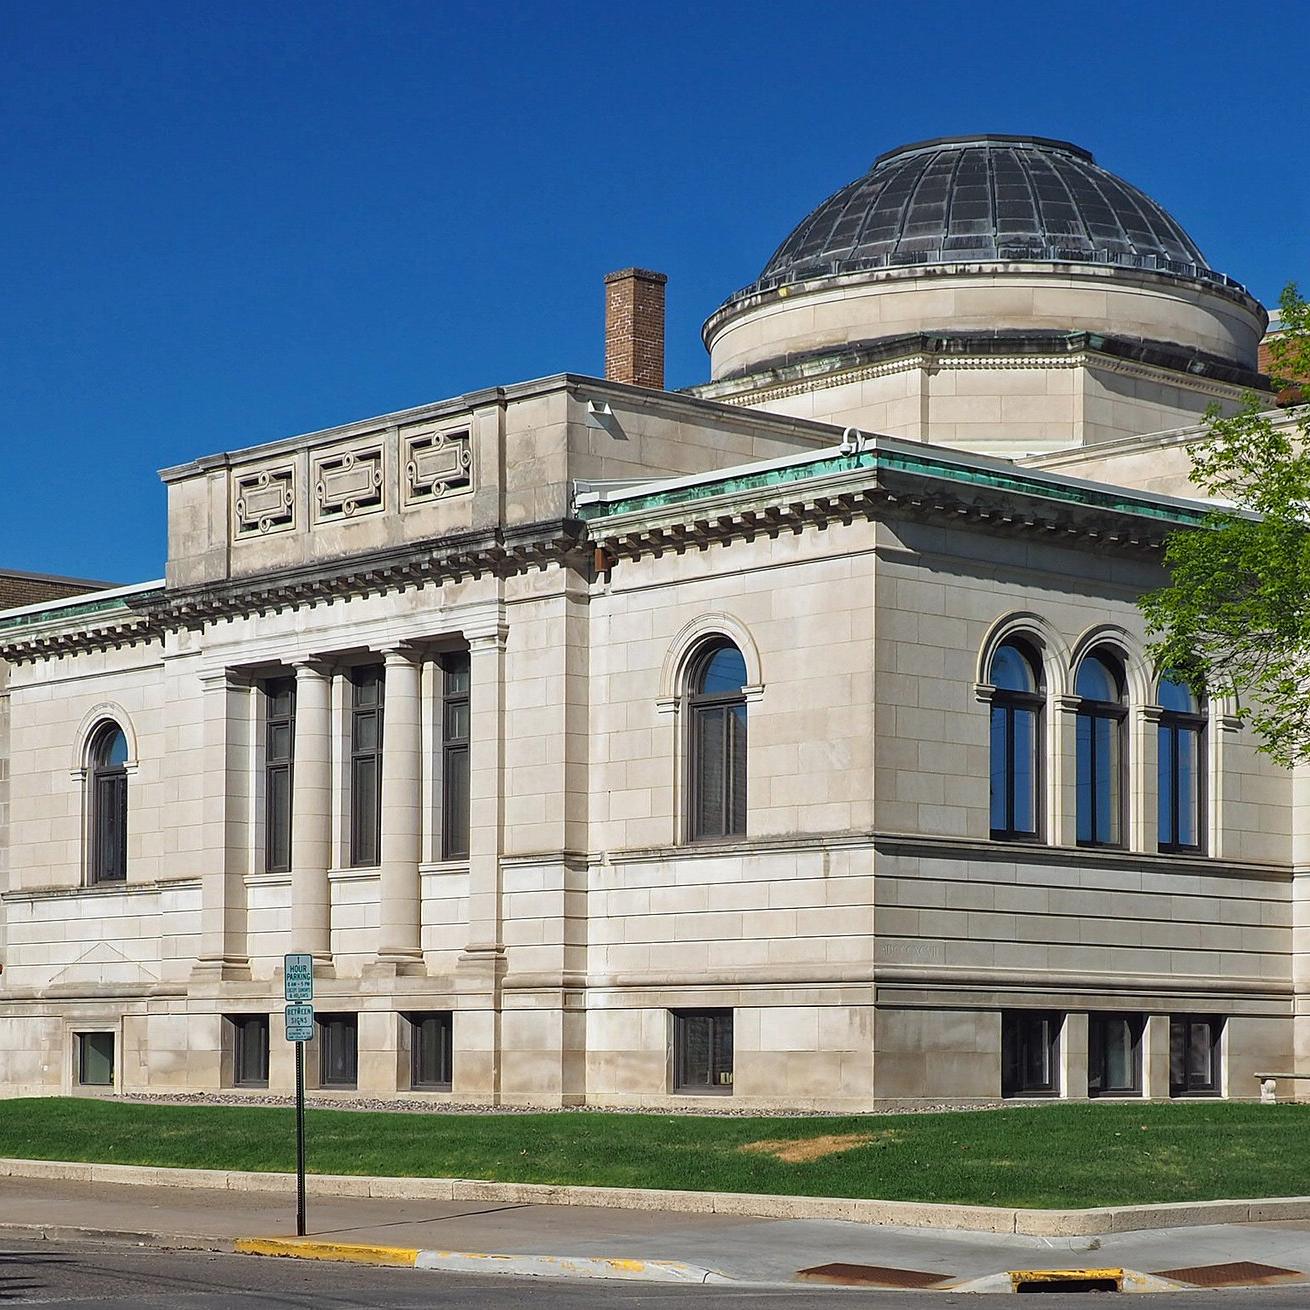 A photograph of the Winona Public Library's neoclassical facade.